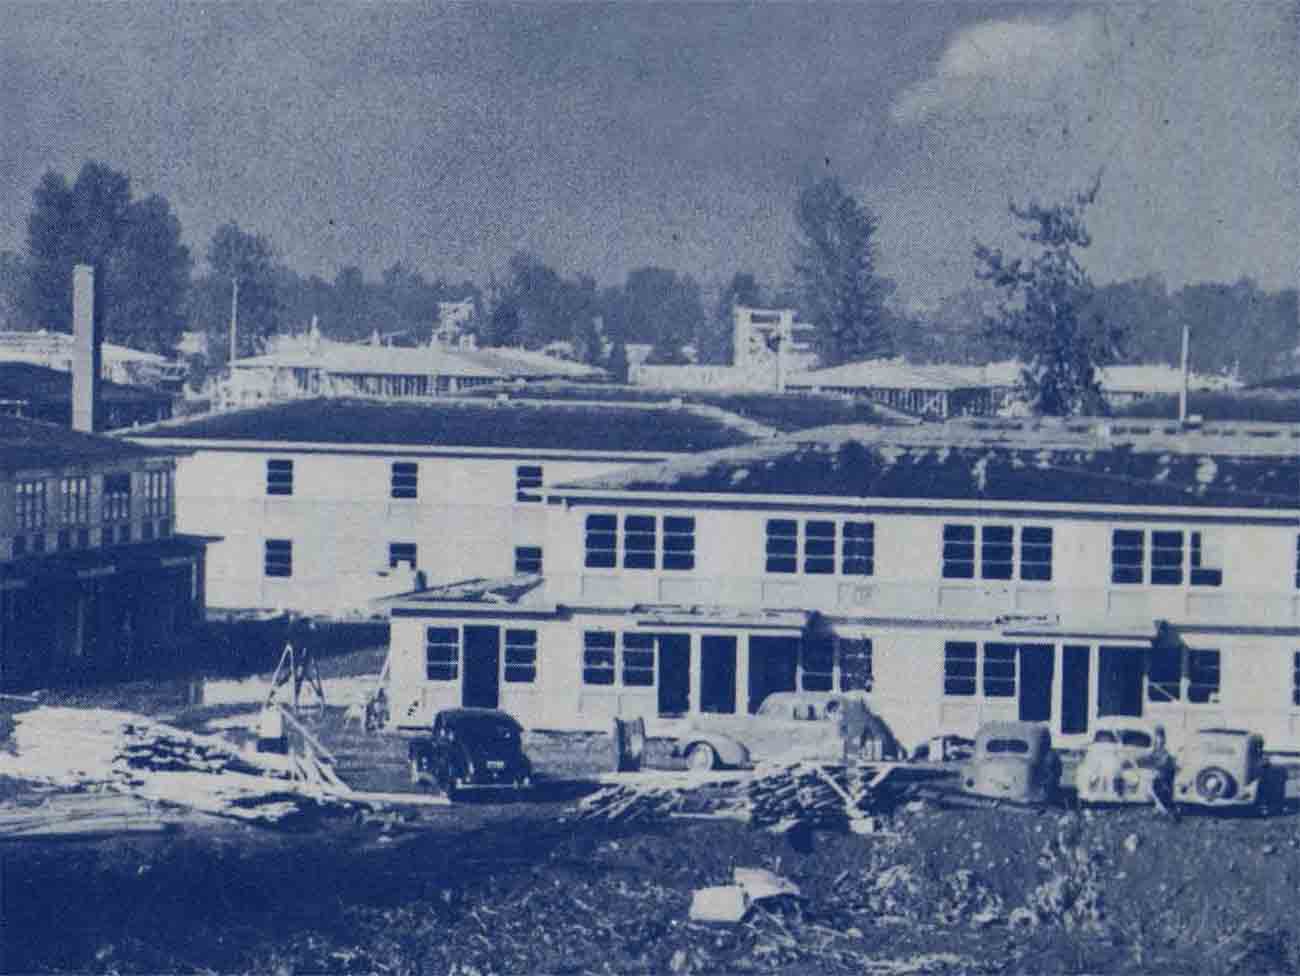 Vanport worker apartments under construction, 1942.